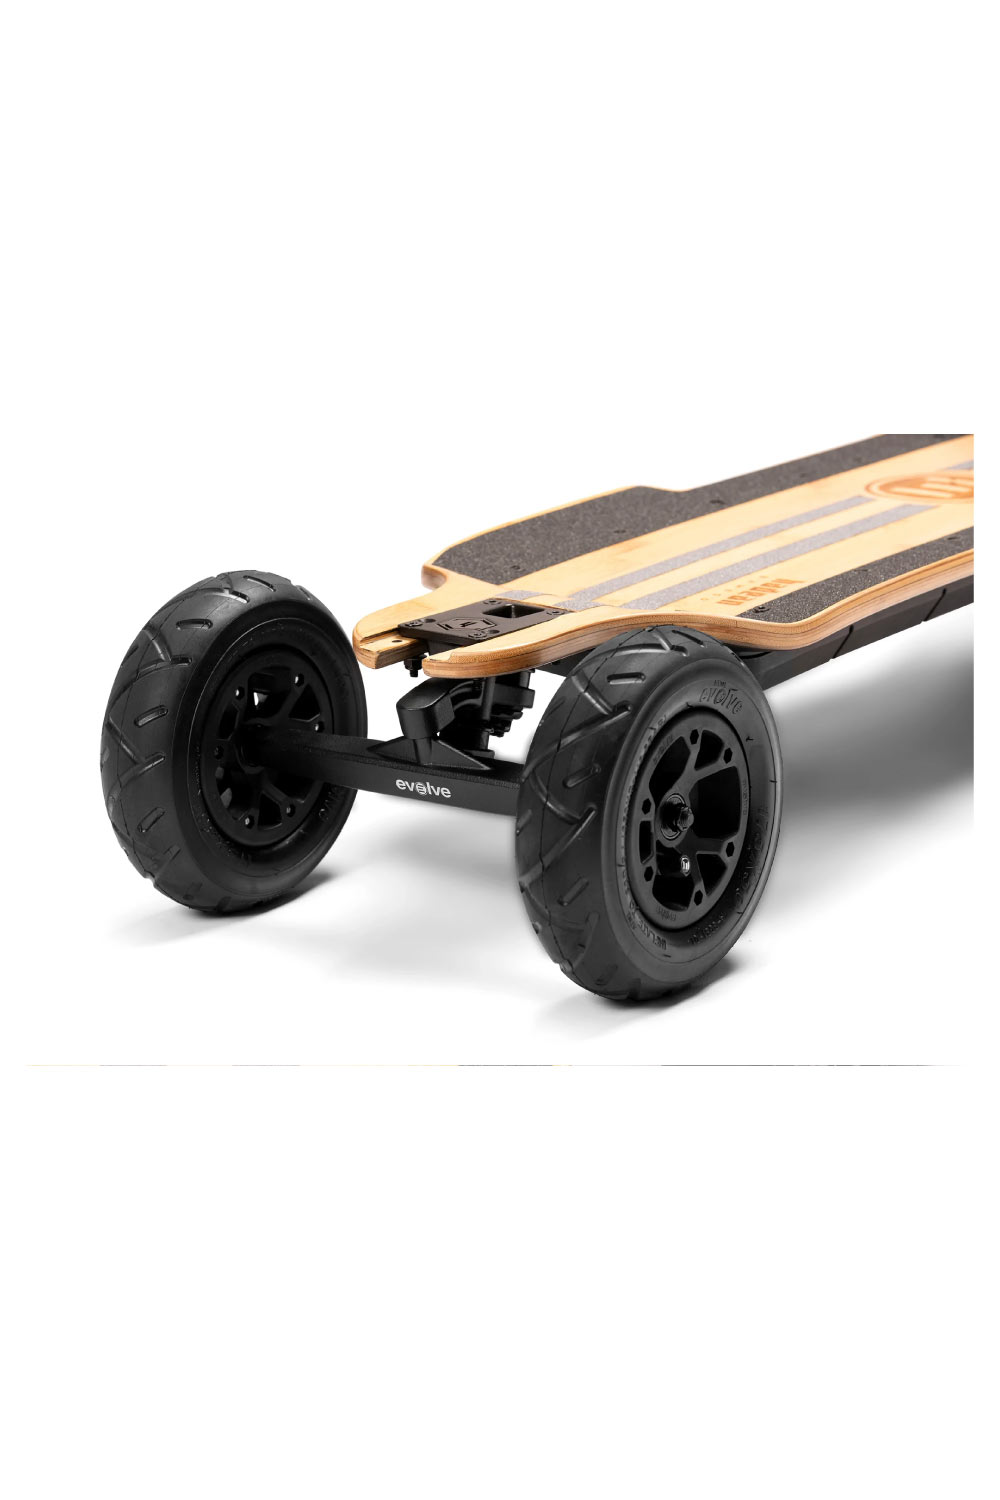 Evolve Hadean Bamboo All Terrain Electric Skateboard (Series 2)